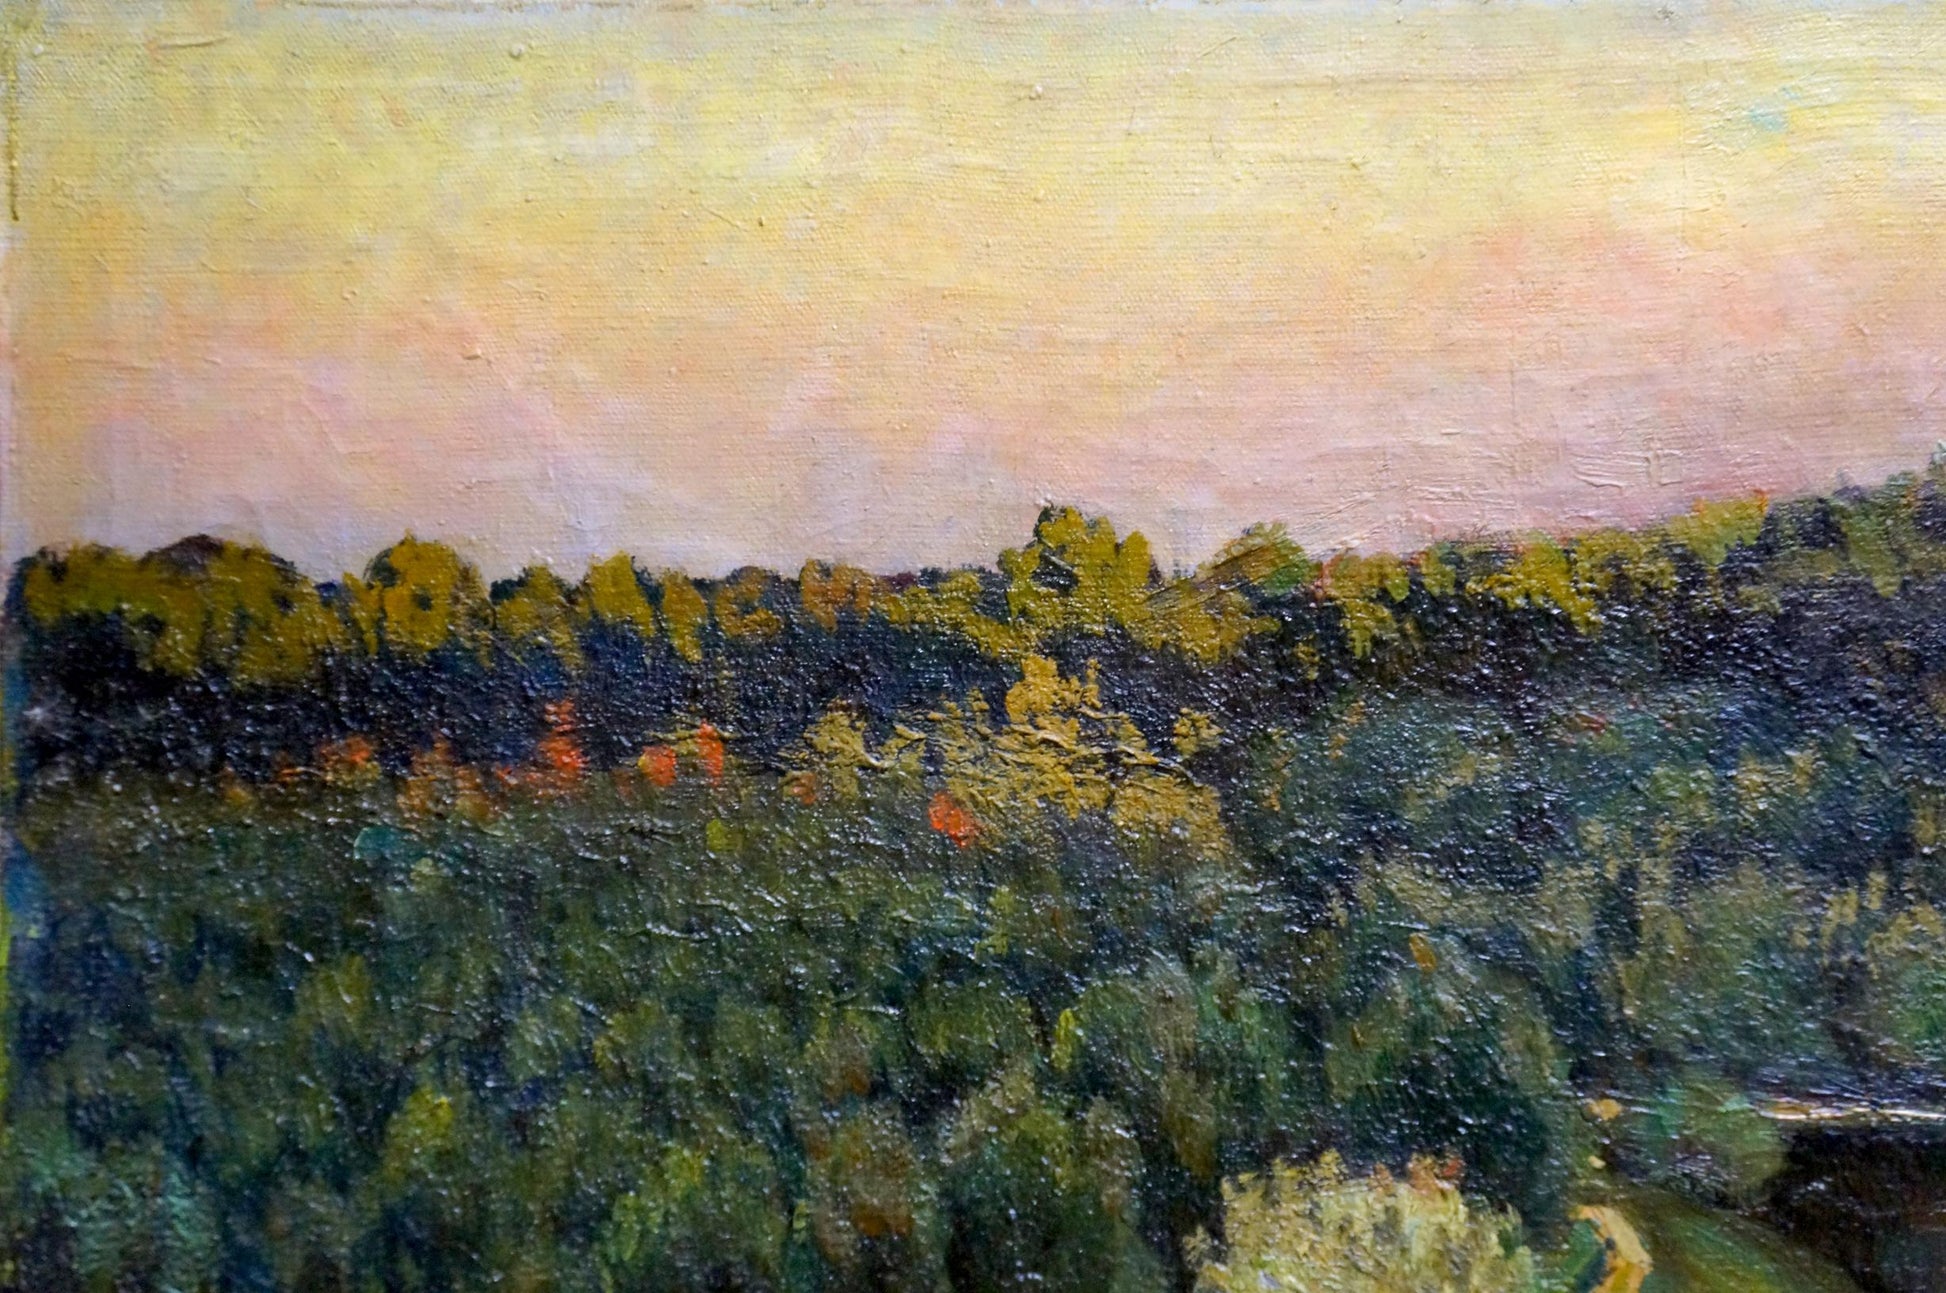 Oil painting "Landscape" by Poymanov, depicting serene natural vistas.